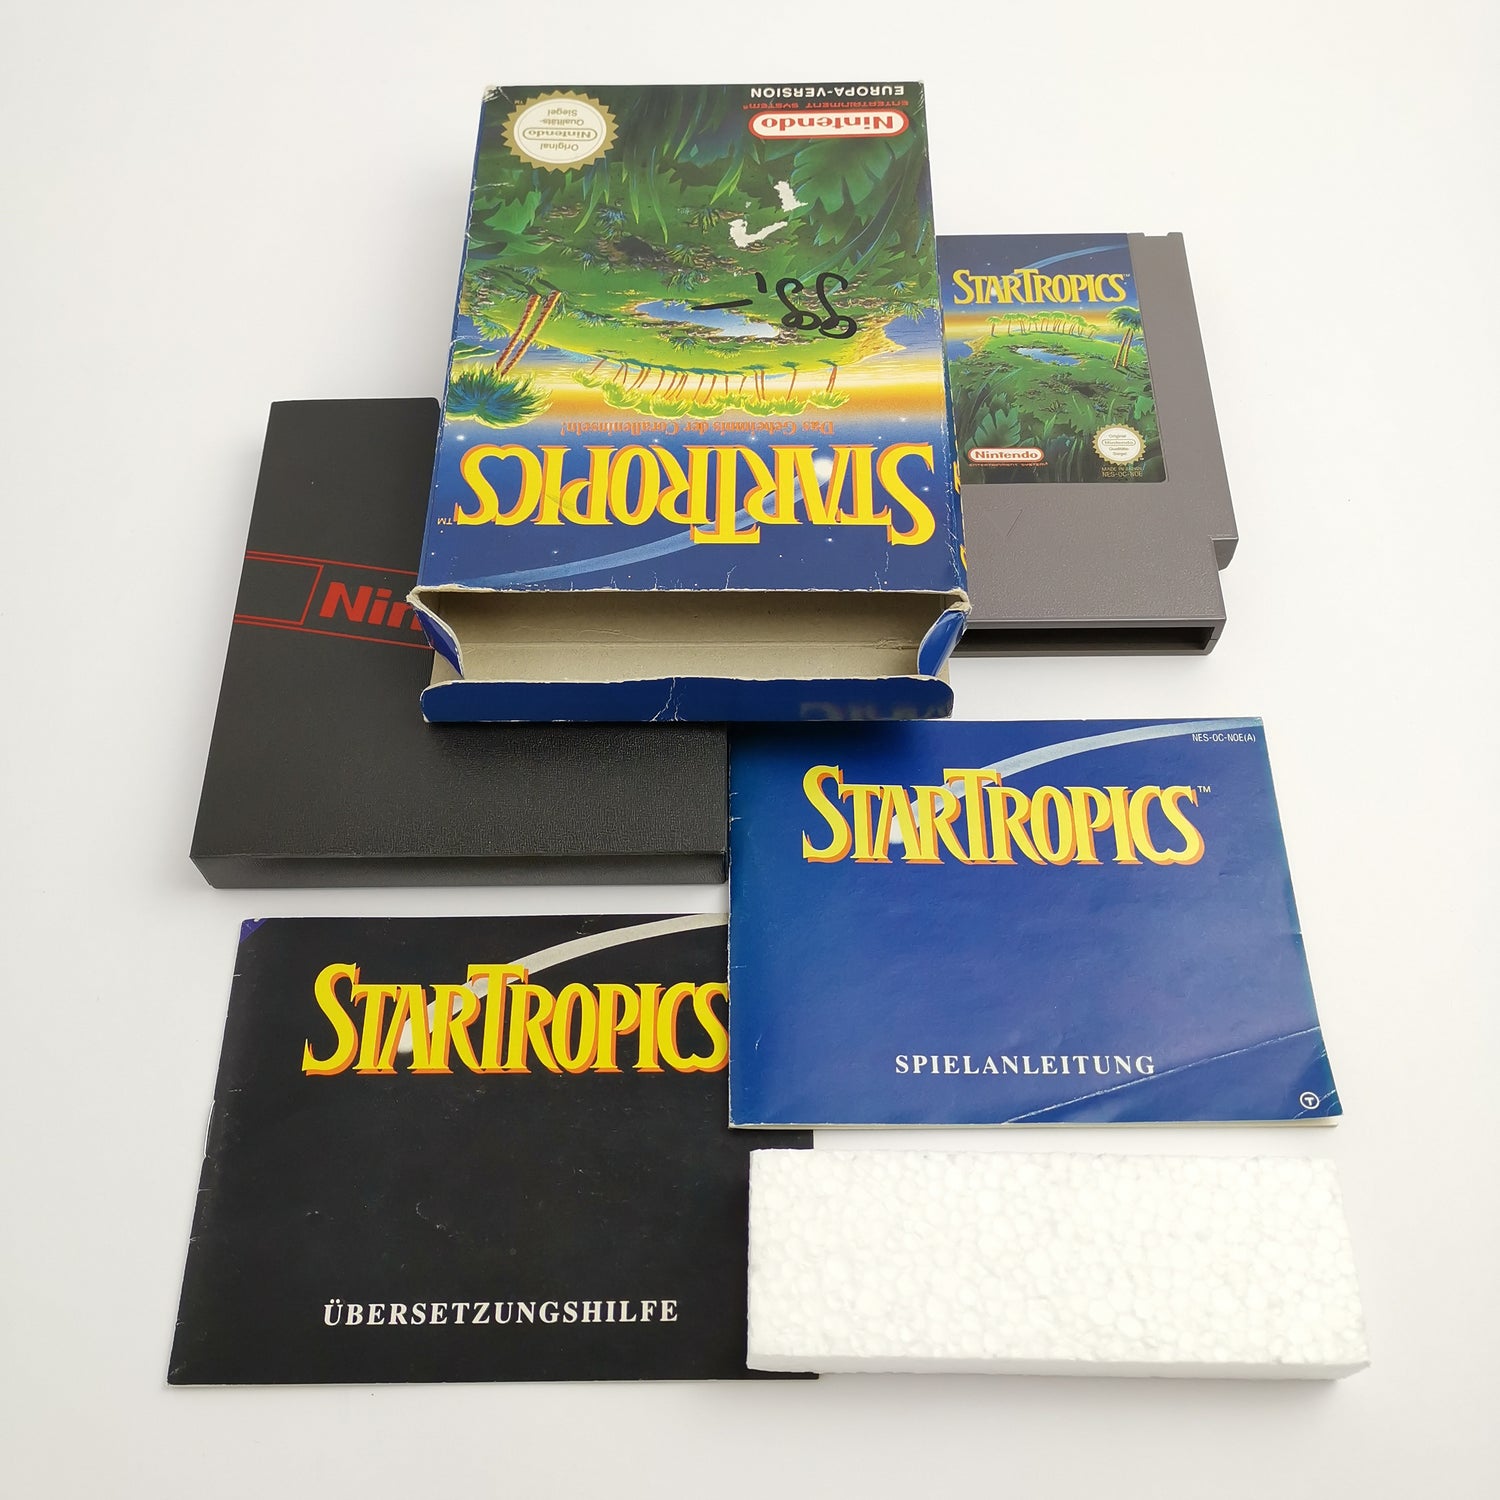 Nintendo Entertainment System Game: Star Tropics | NES Startropics - OVP PAL